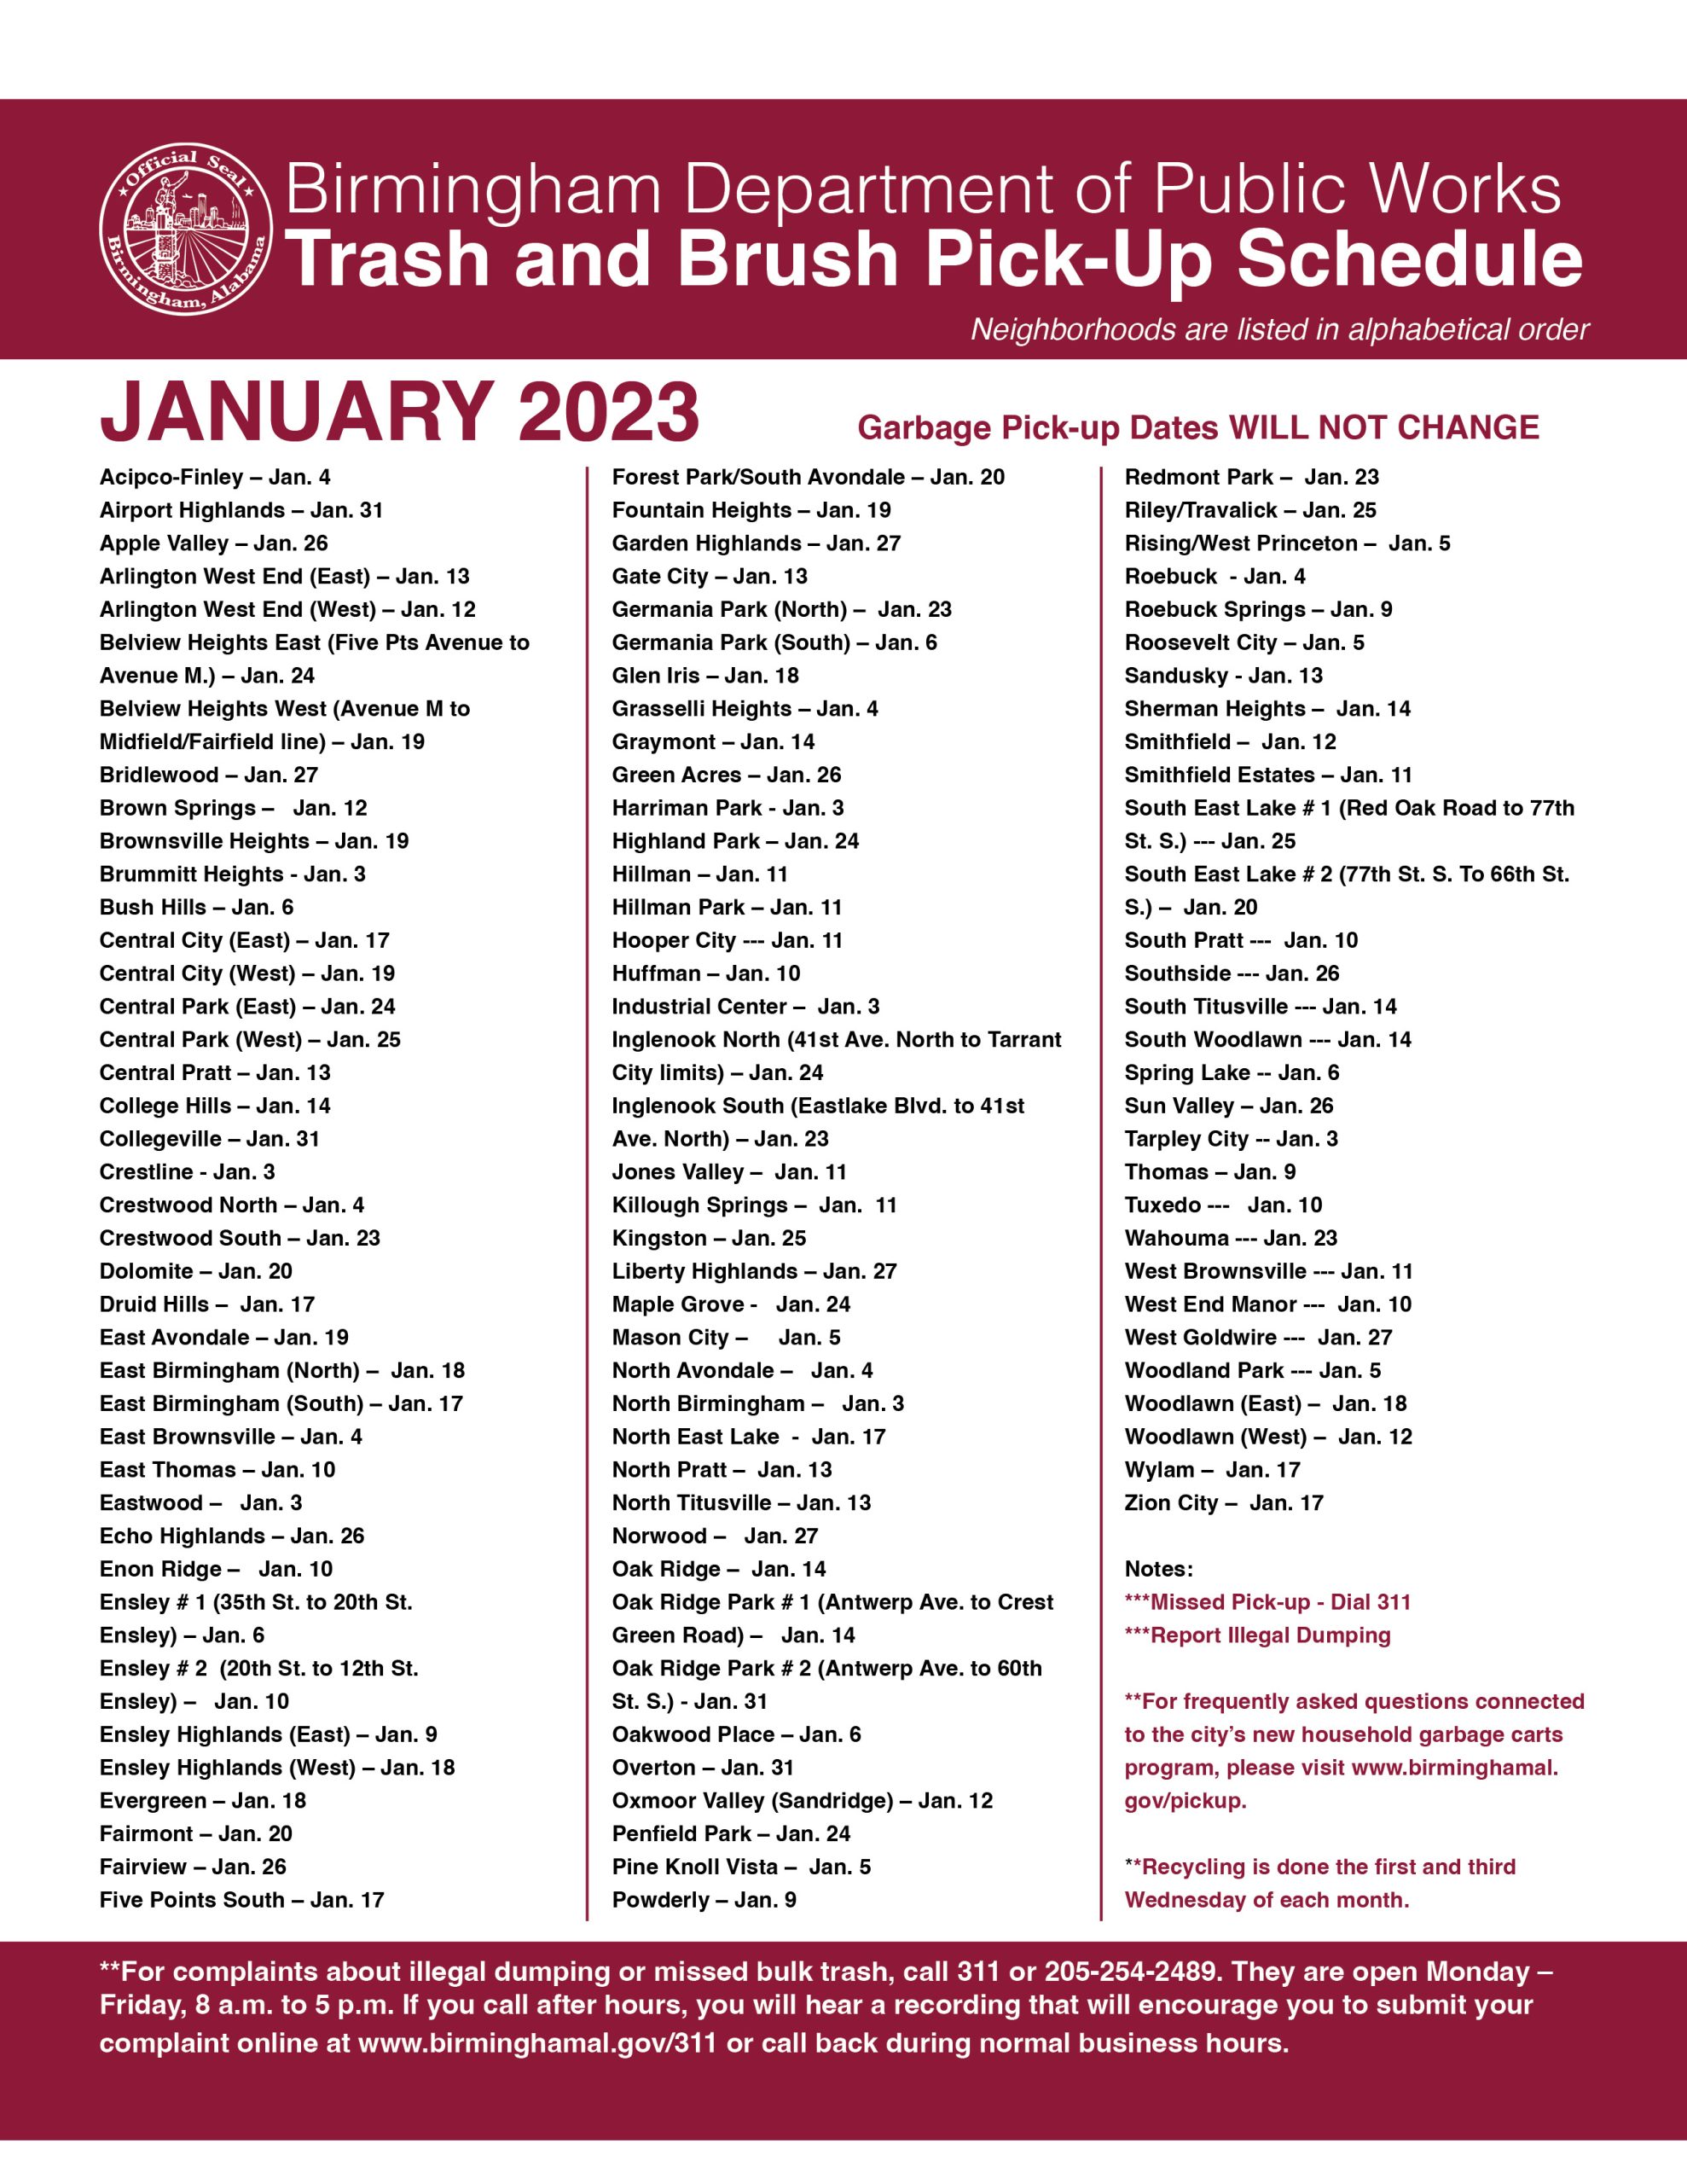 January 2023 Bulk Trash Schedule District 6 Birmingham, Alabama